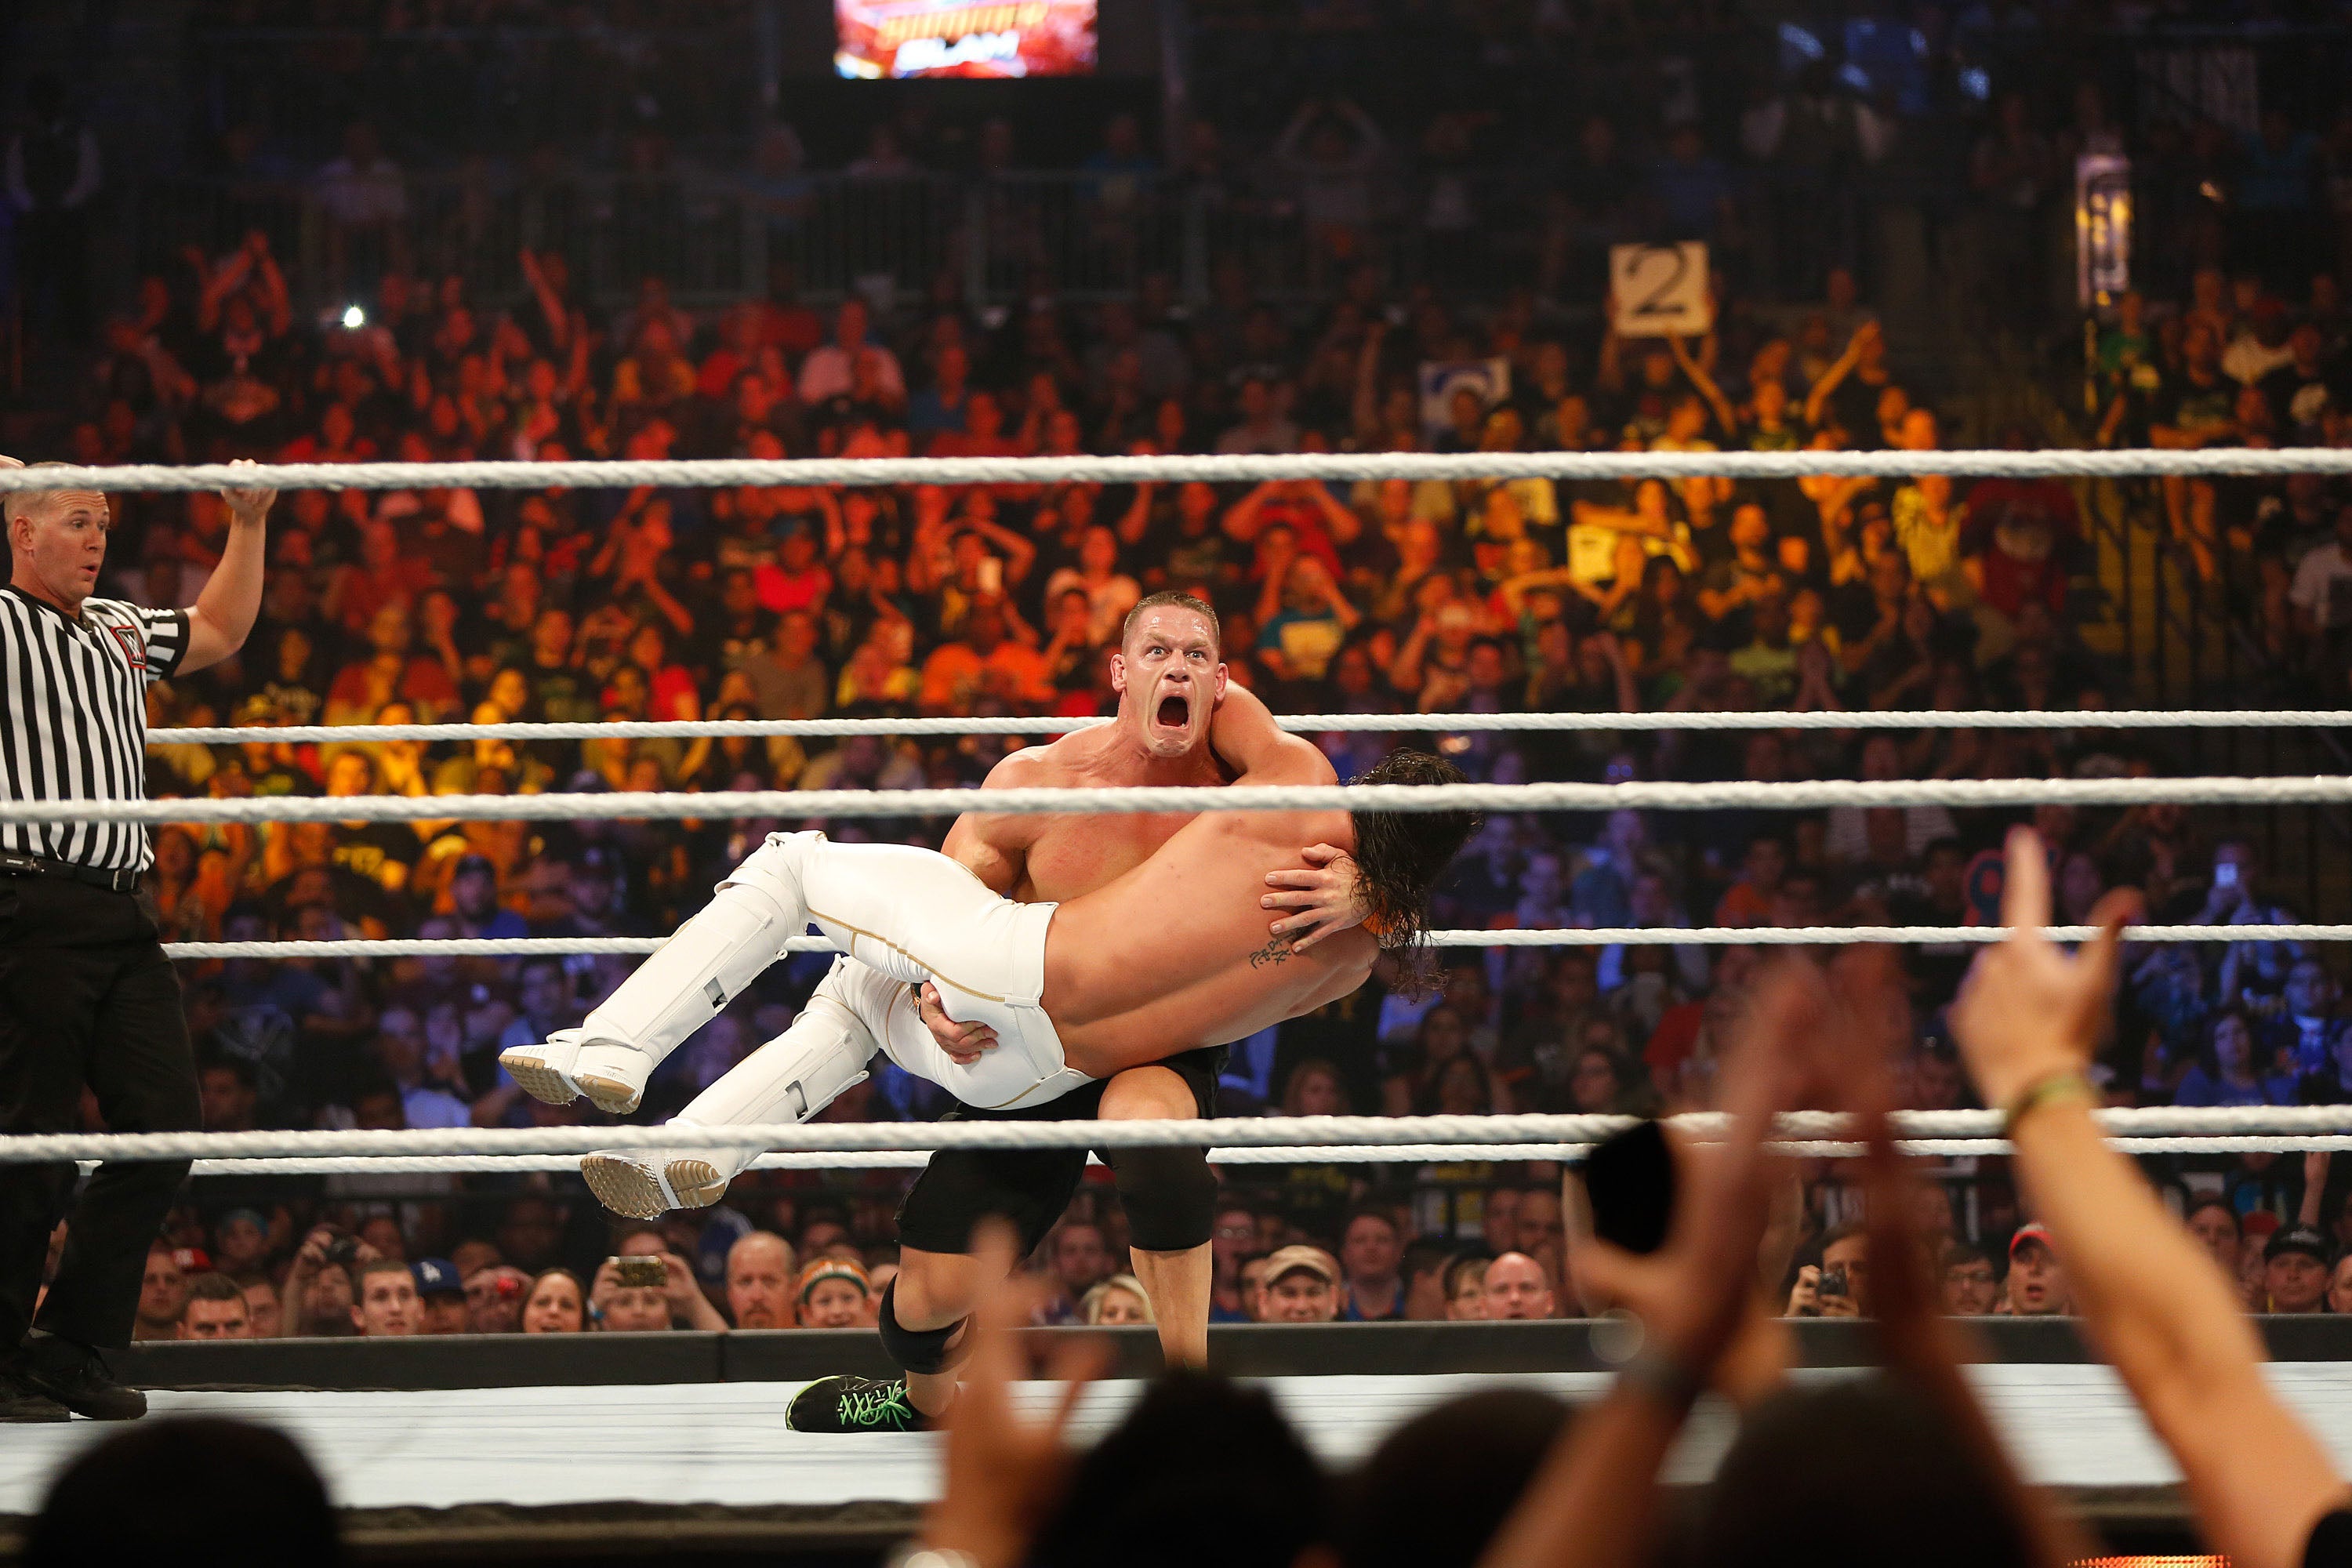 Cena is a WWE legend